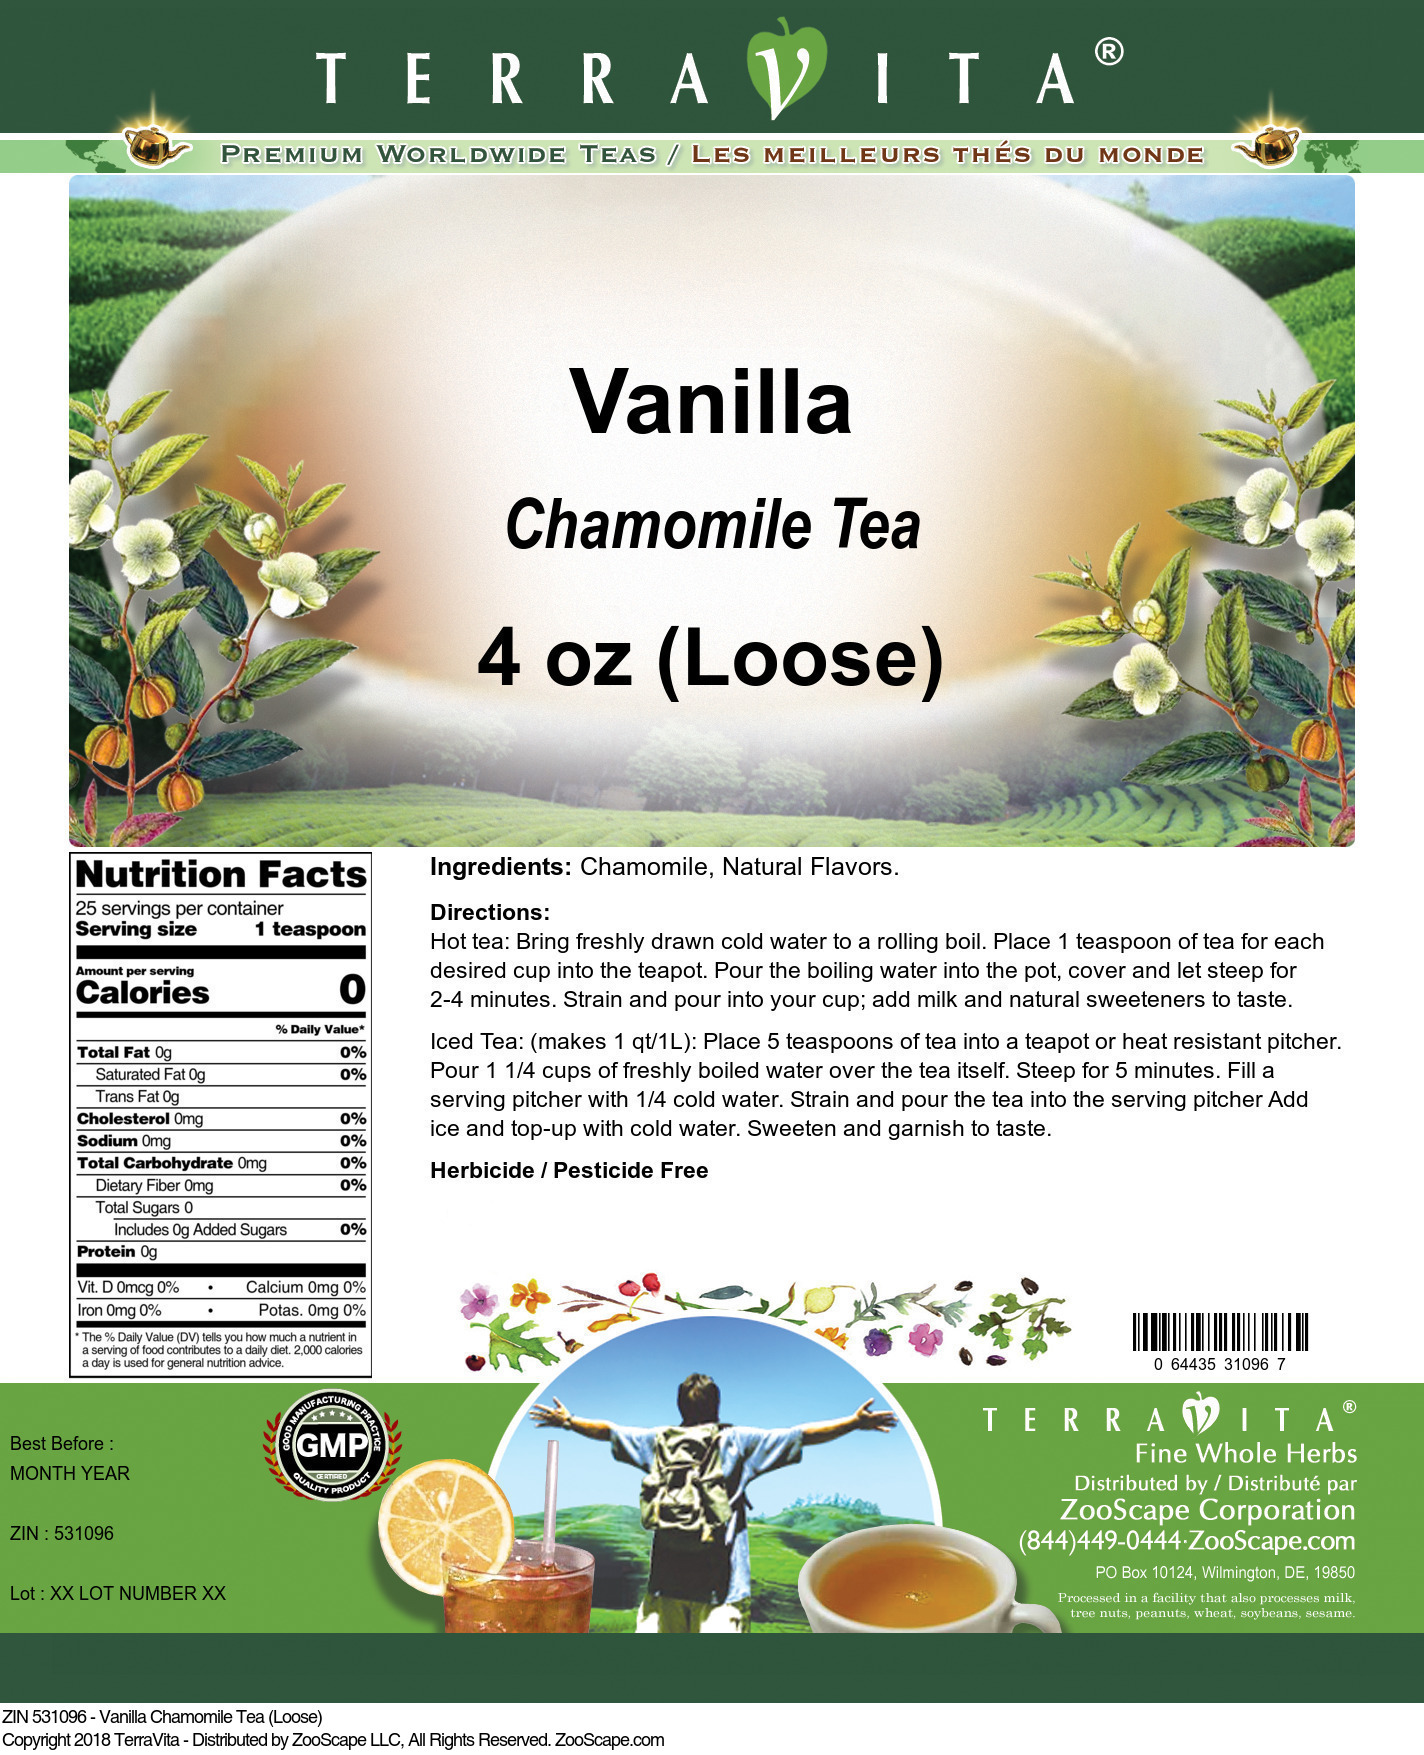 Vanilla Chamomile Tea (Loose) - Label